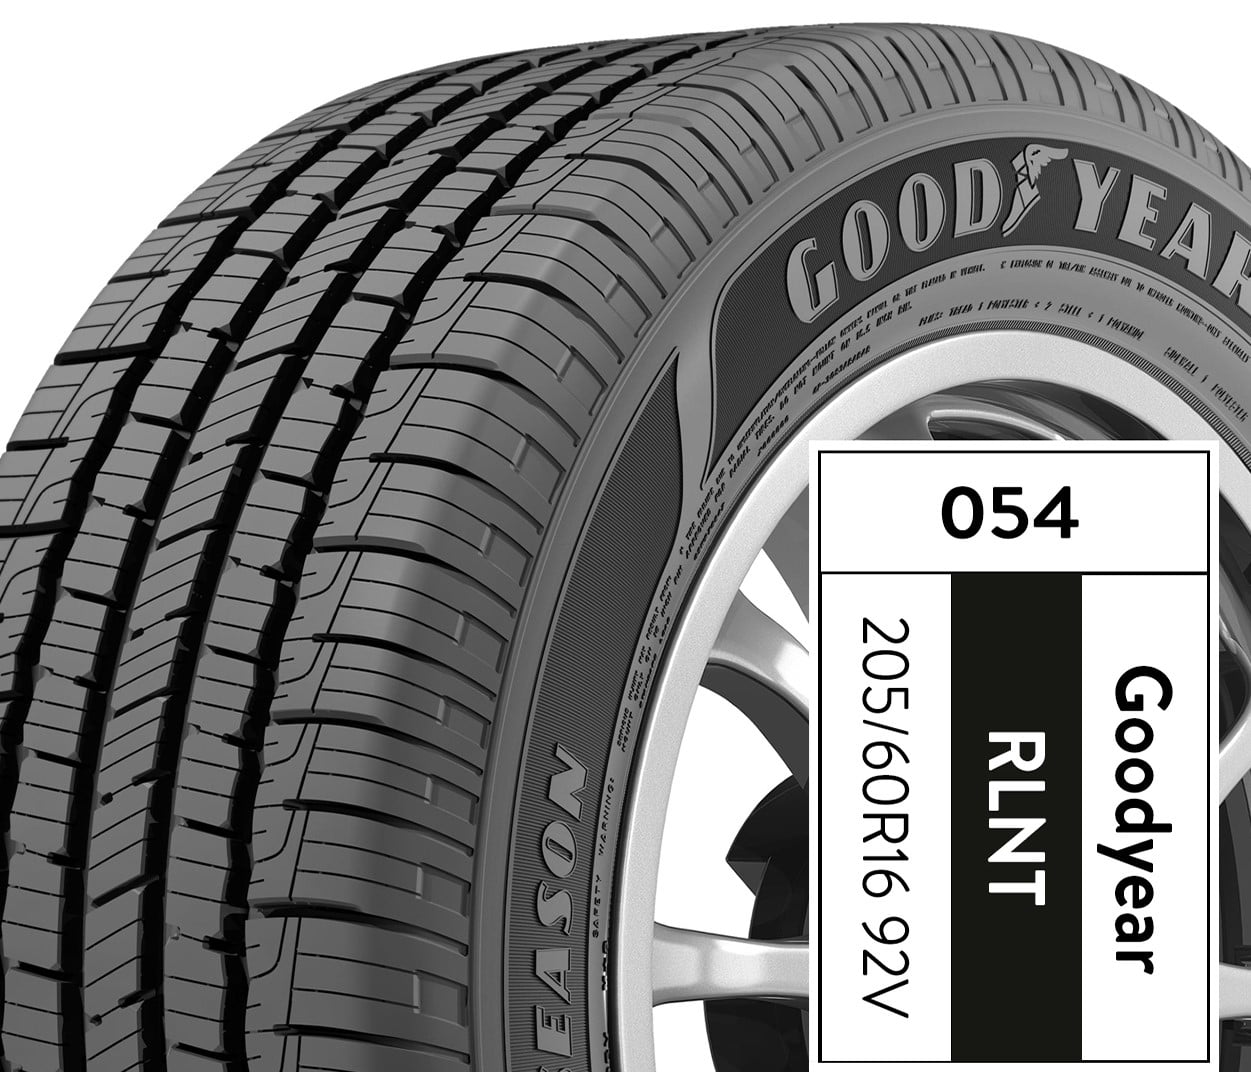 Goodyear Reliant All-Season 205/60R16 92V All-Season Tire